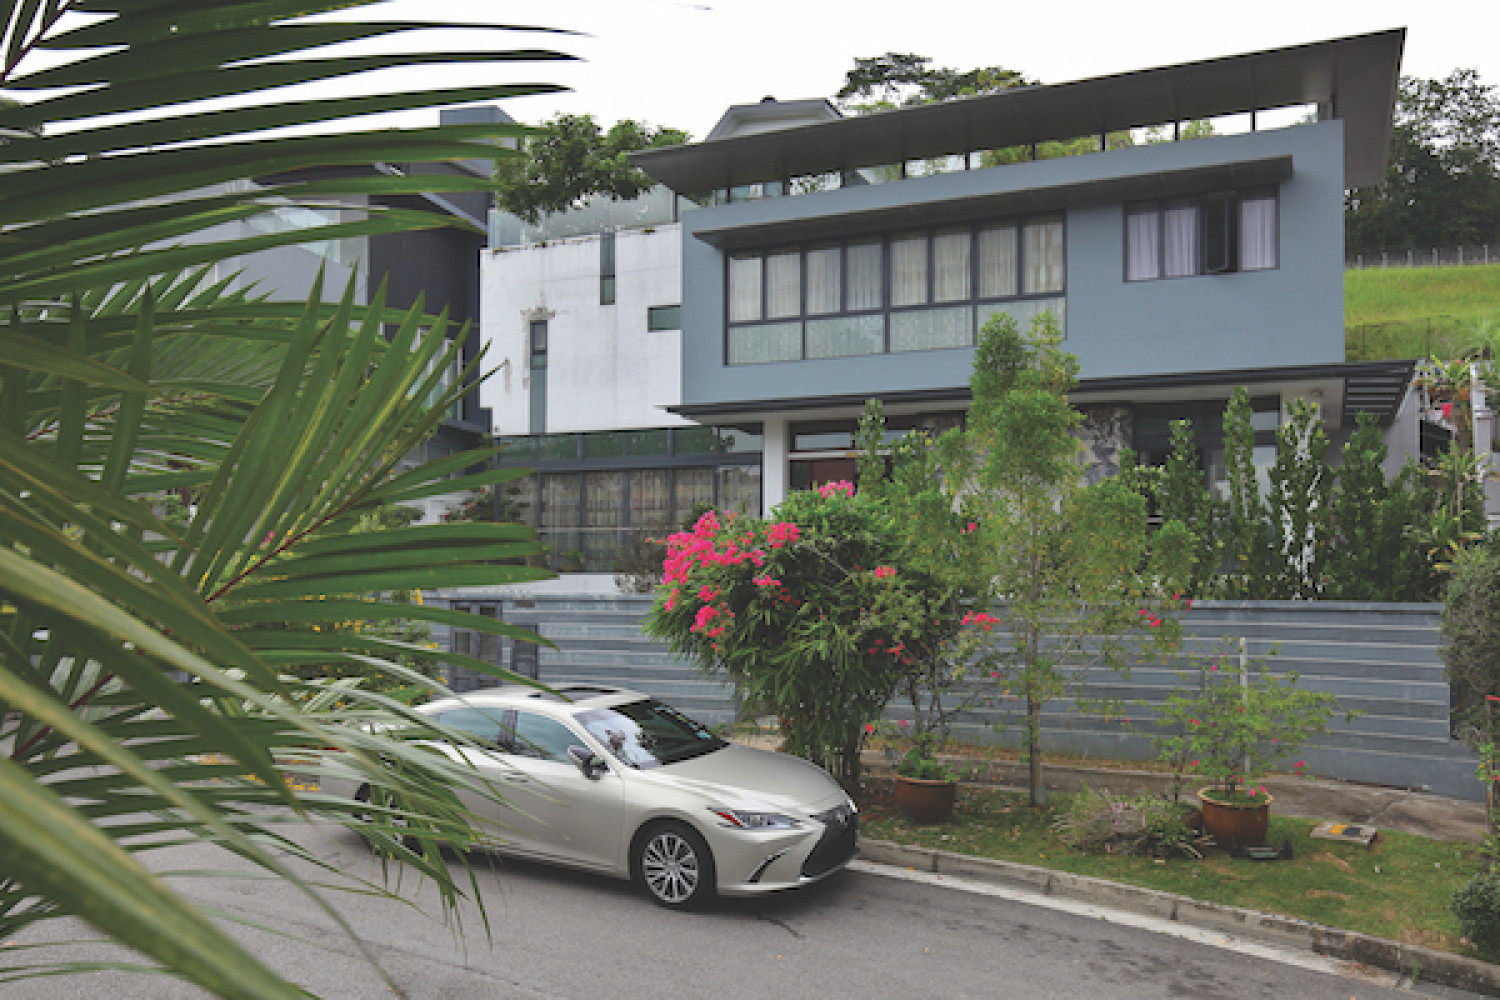 Detached house at Jalan Dermawan up for sale at $10.8 mil - Property News